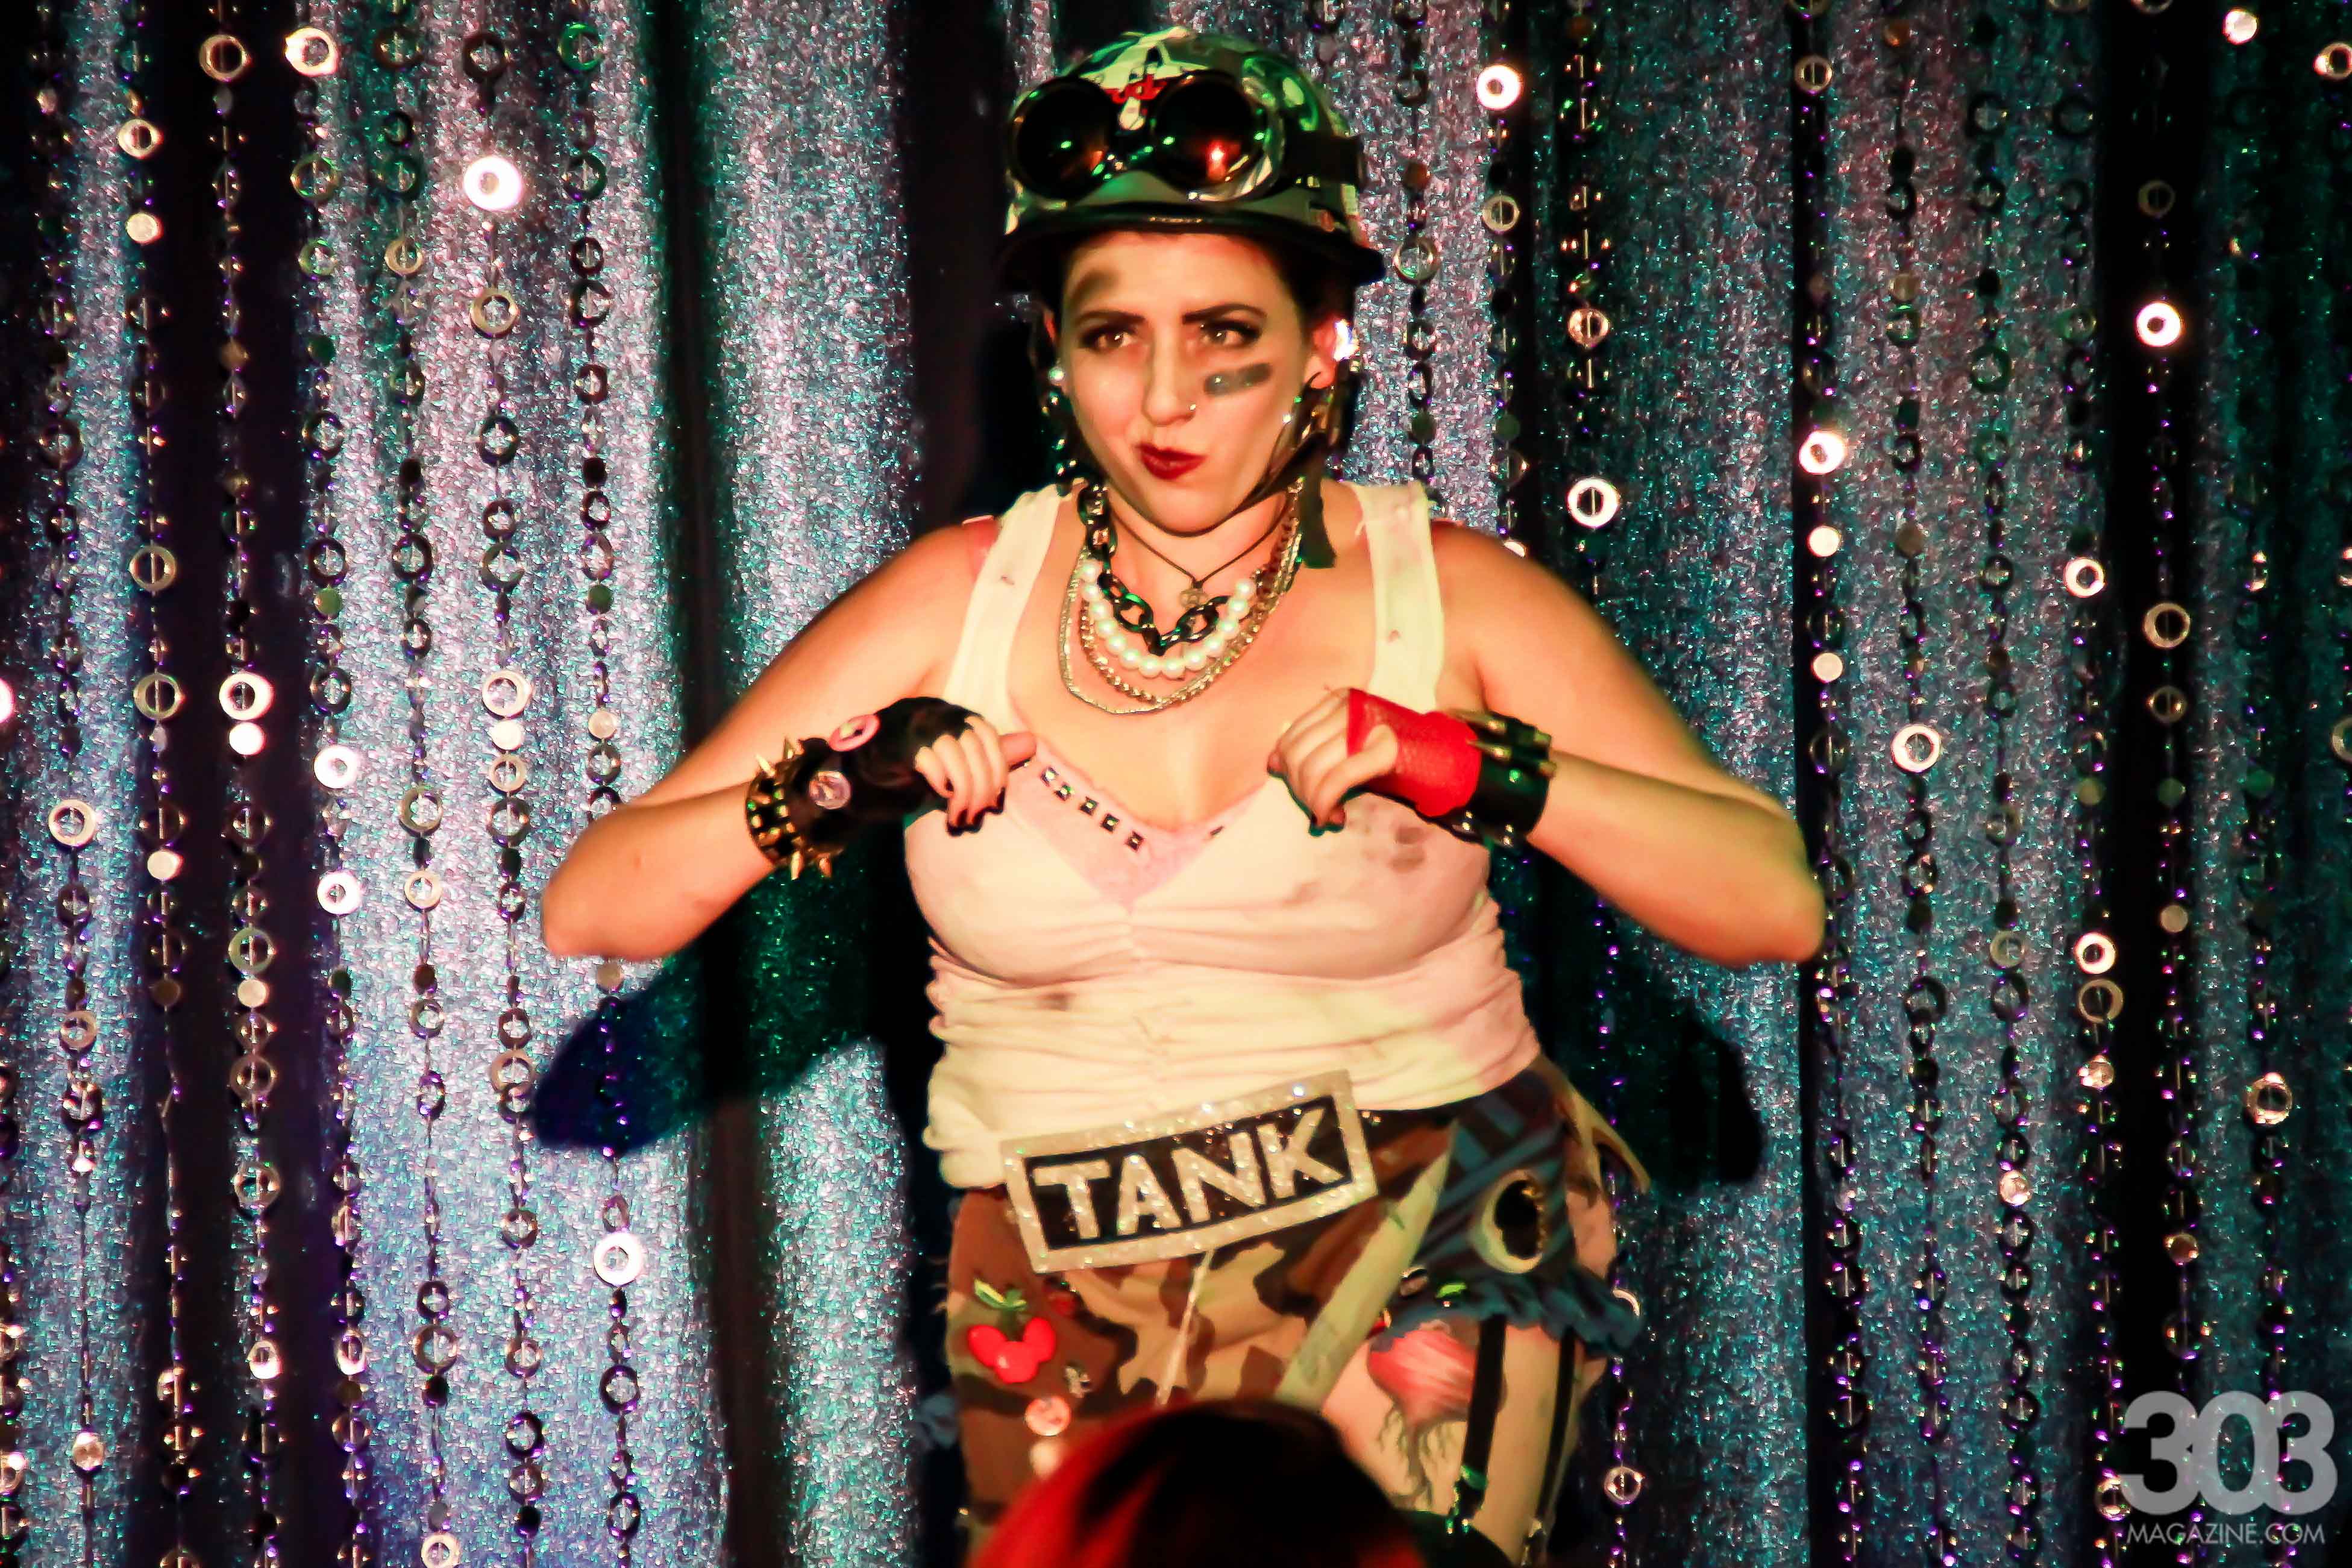 Laika Fox as Tank Girl.